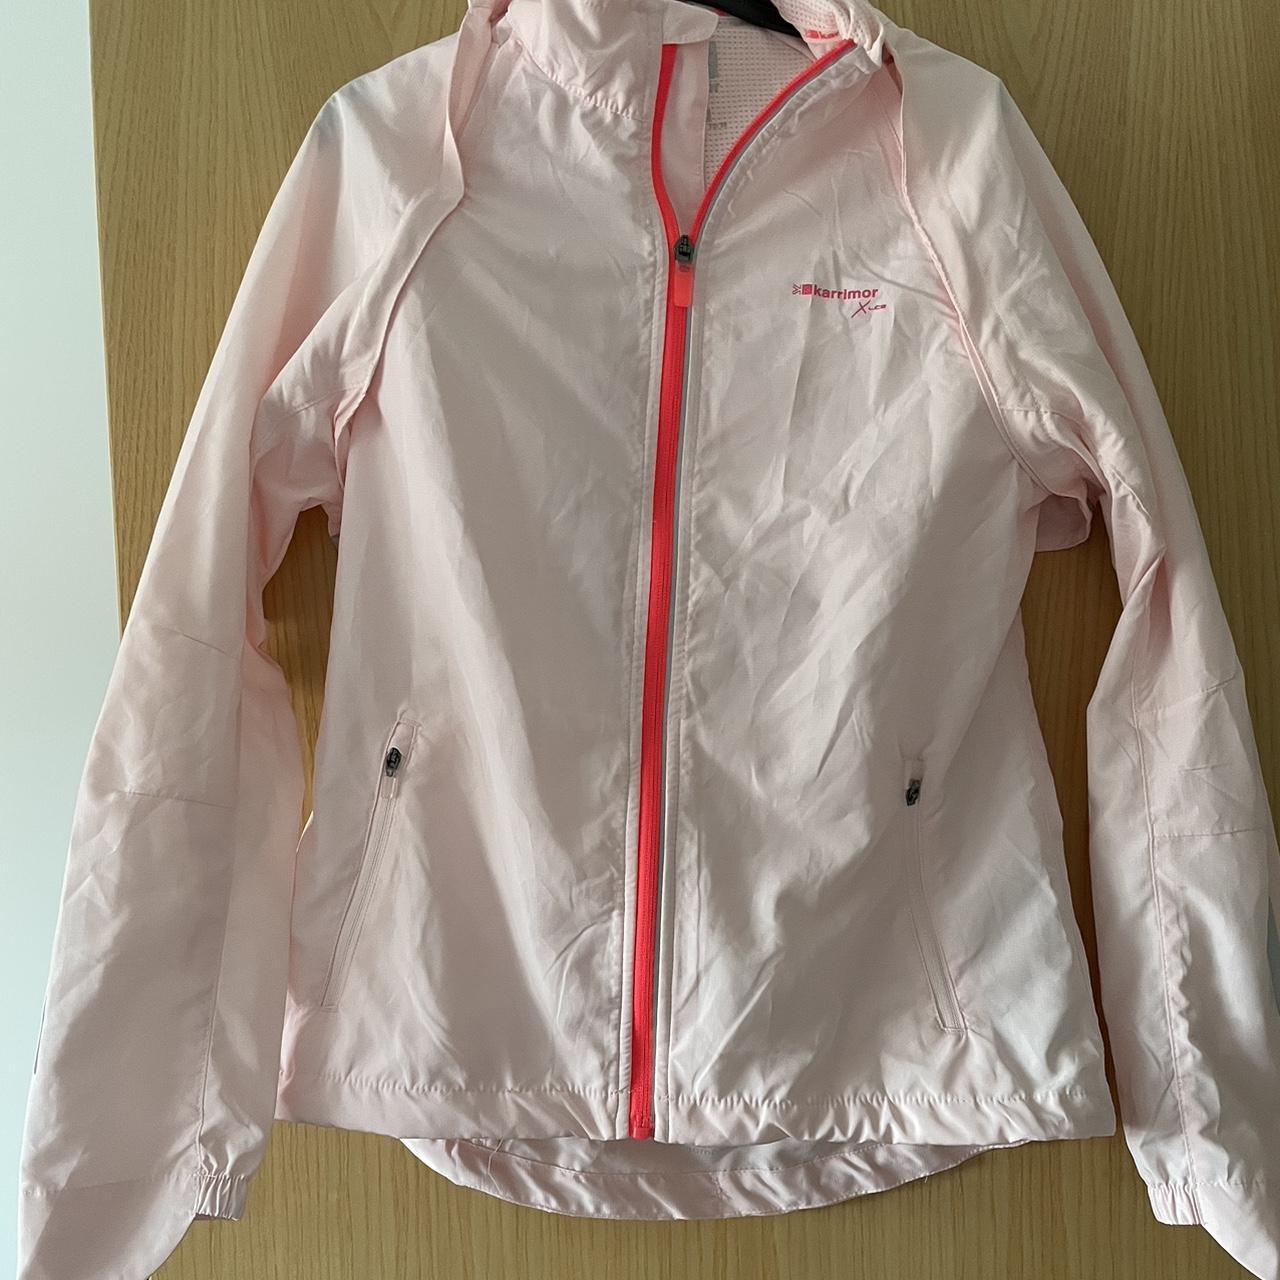 Karrimor Women's Pink Jacket | Depop